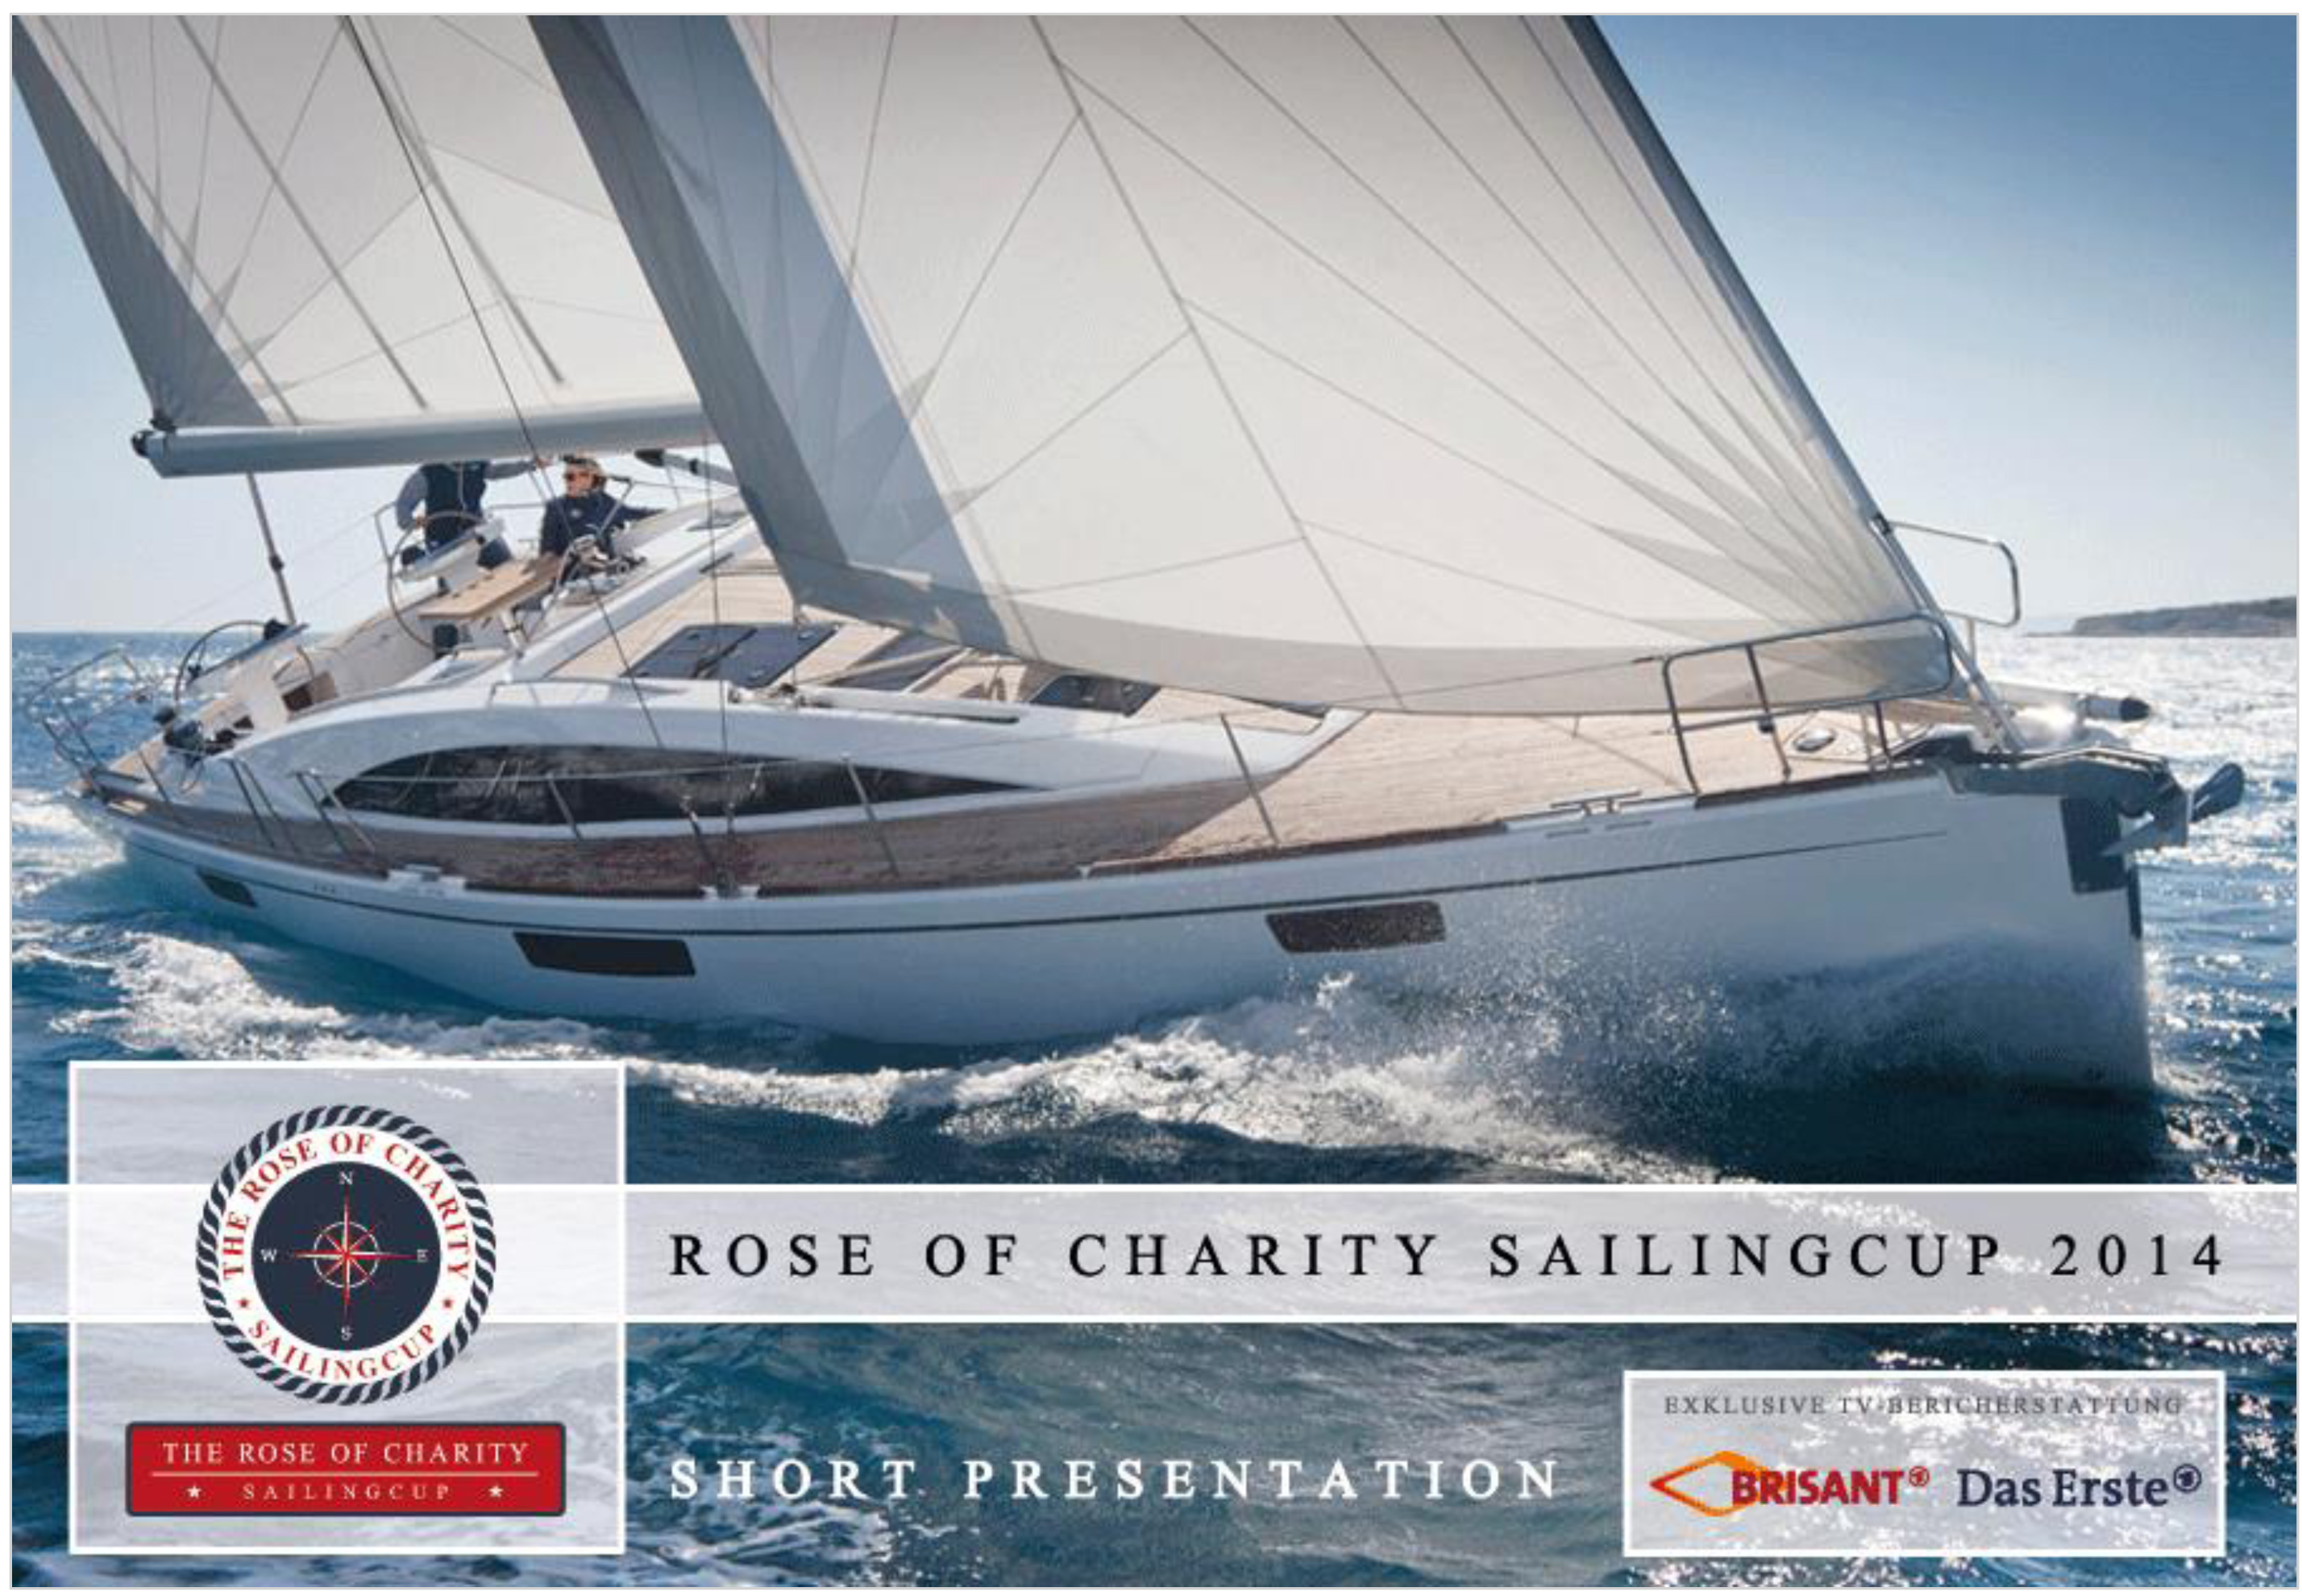 El Puerto Deportivo Estepona acoge la regata 'Rose of Charity Sailing Cup'